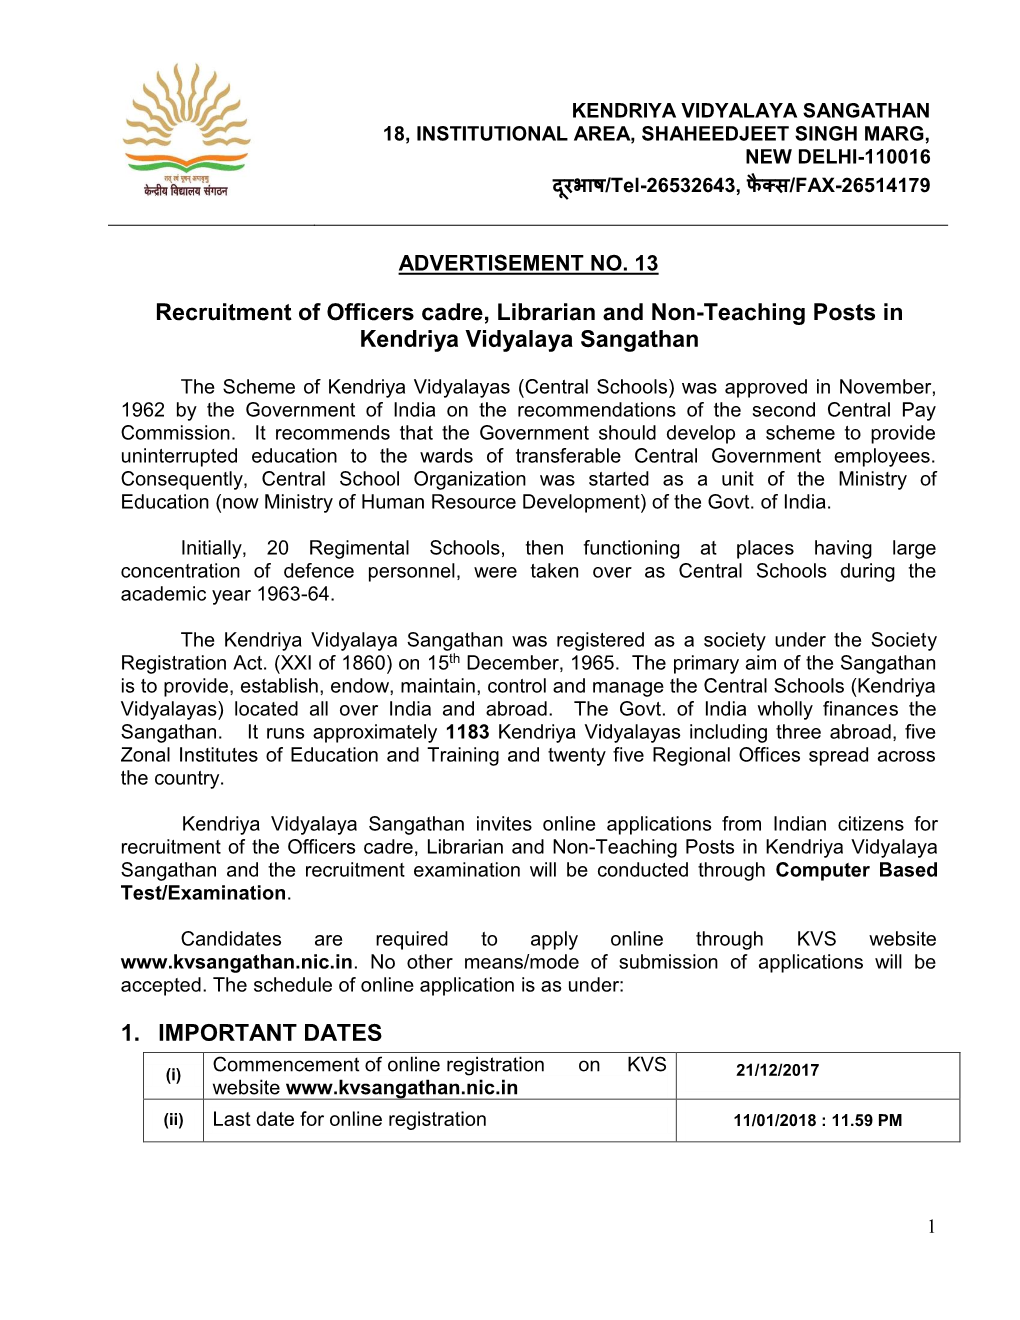 Recruitment of Officers Cadre, Librarian and Non-Teaching Posts in Kendriya Vidyalaya Sangathan